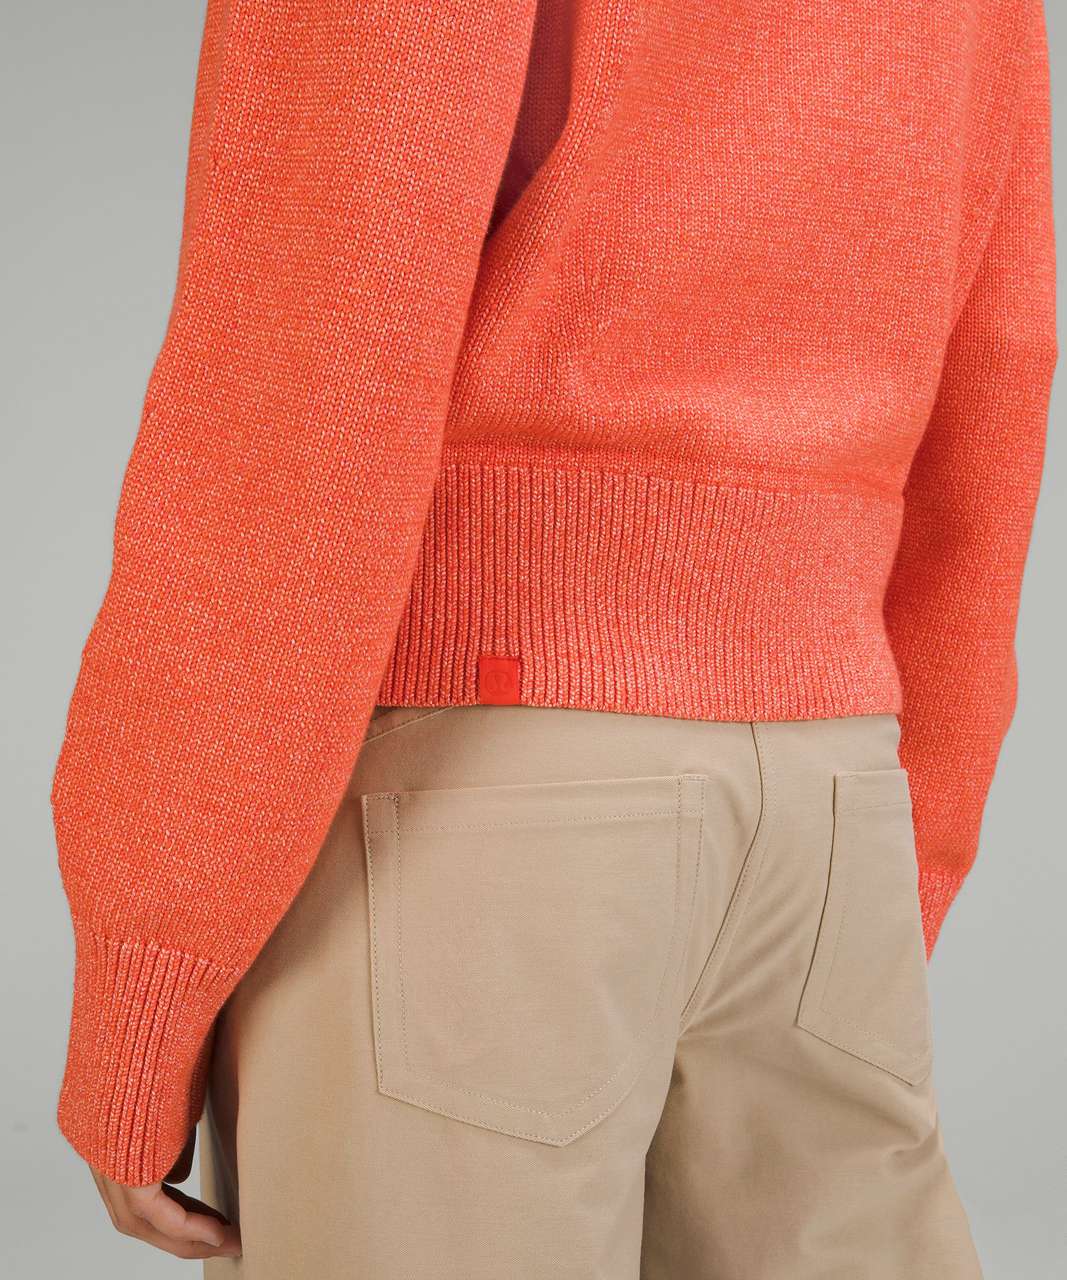 Lululemon Cotton-Blend Full-Zip Sweater - Heathered Solar Orange